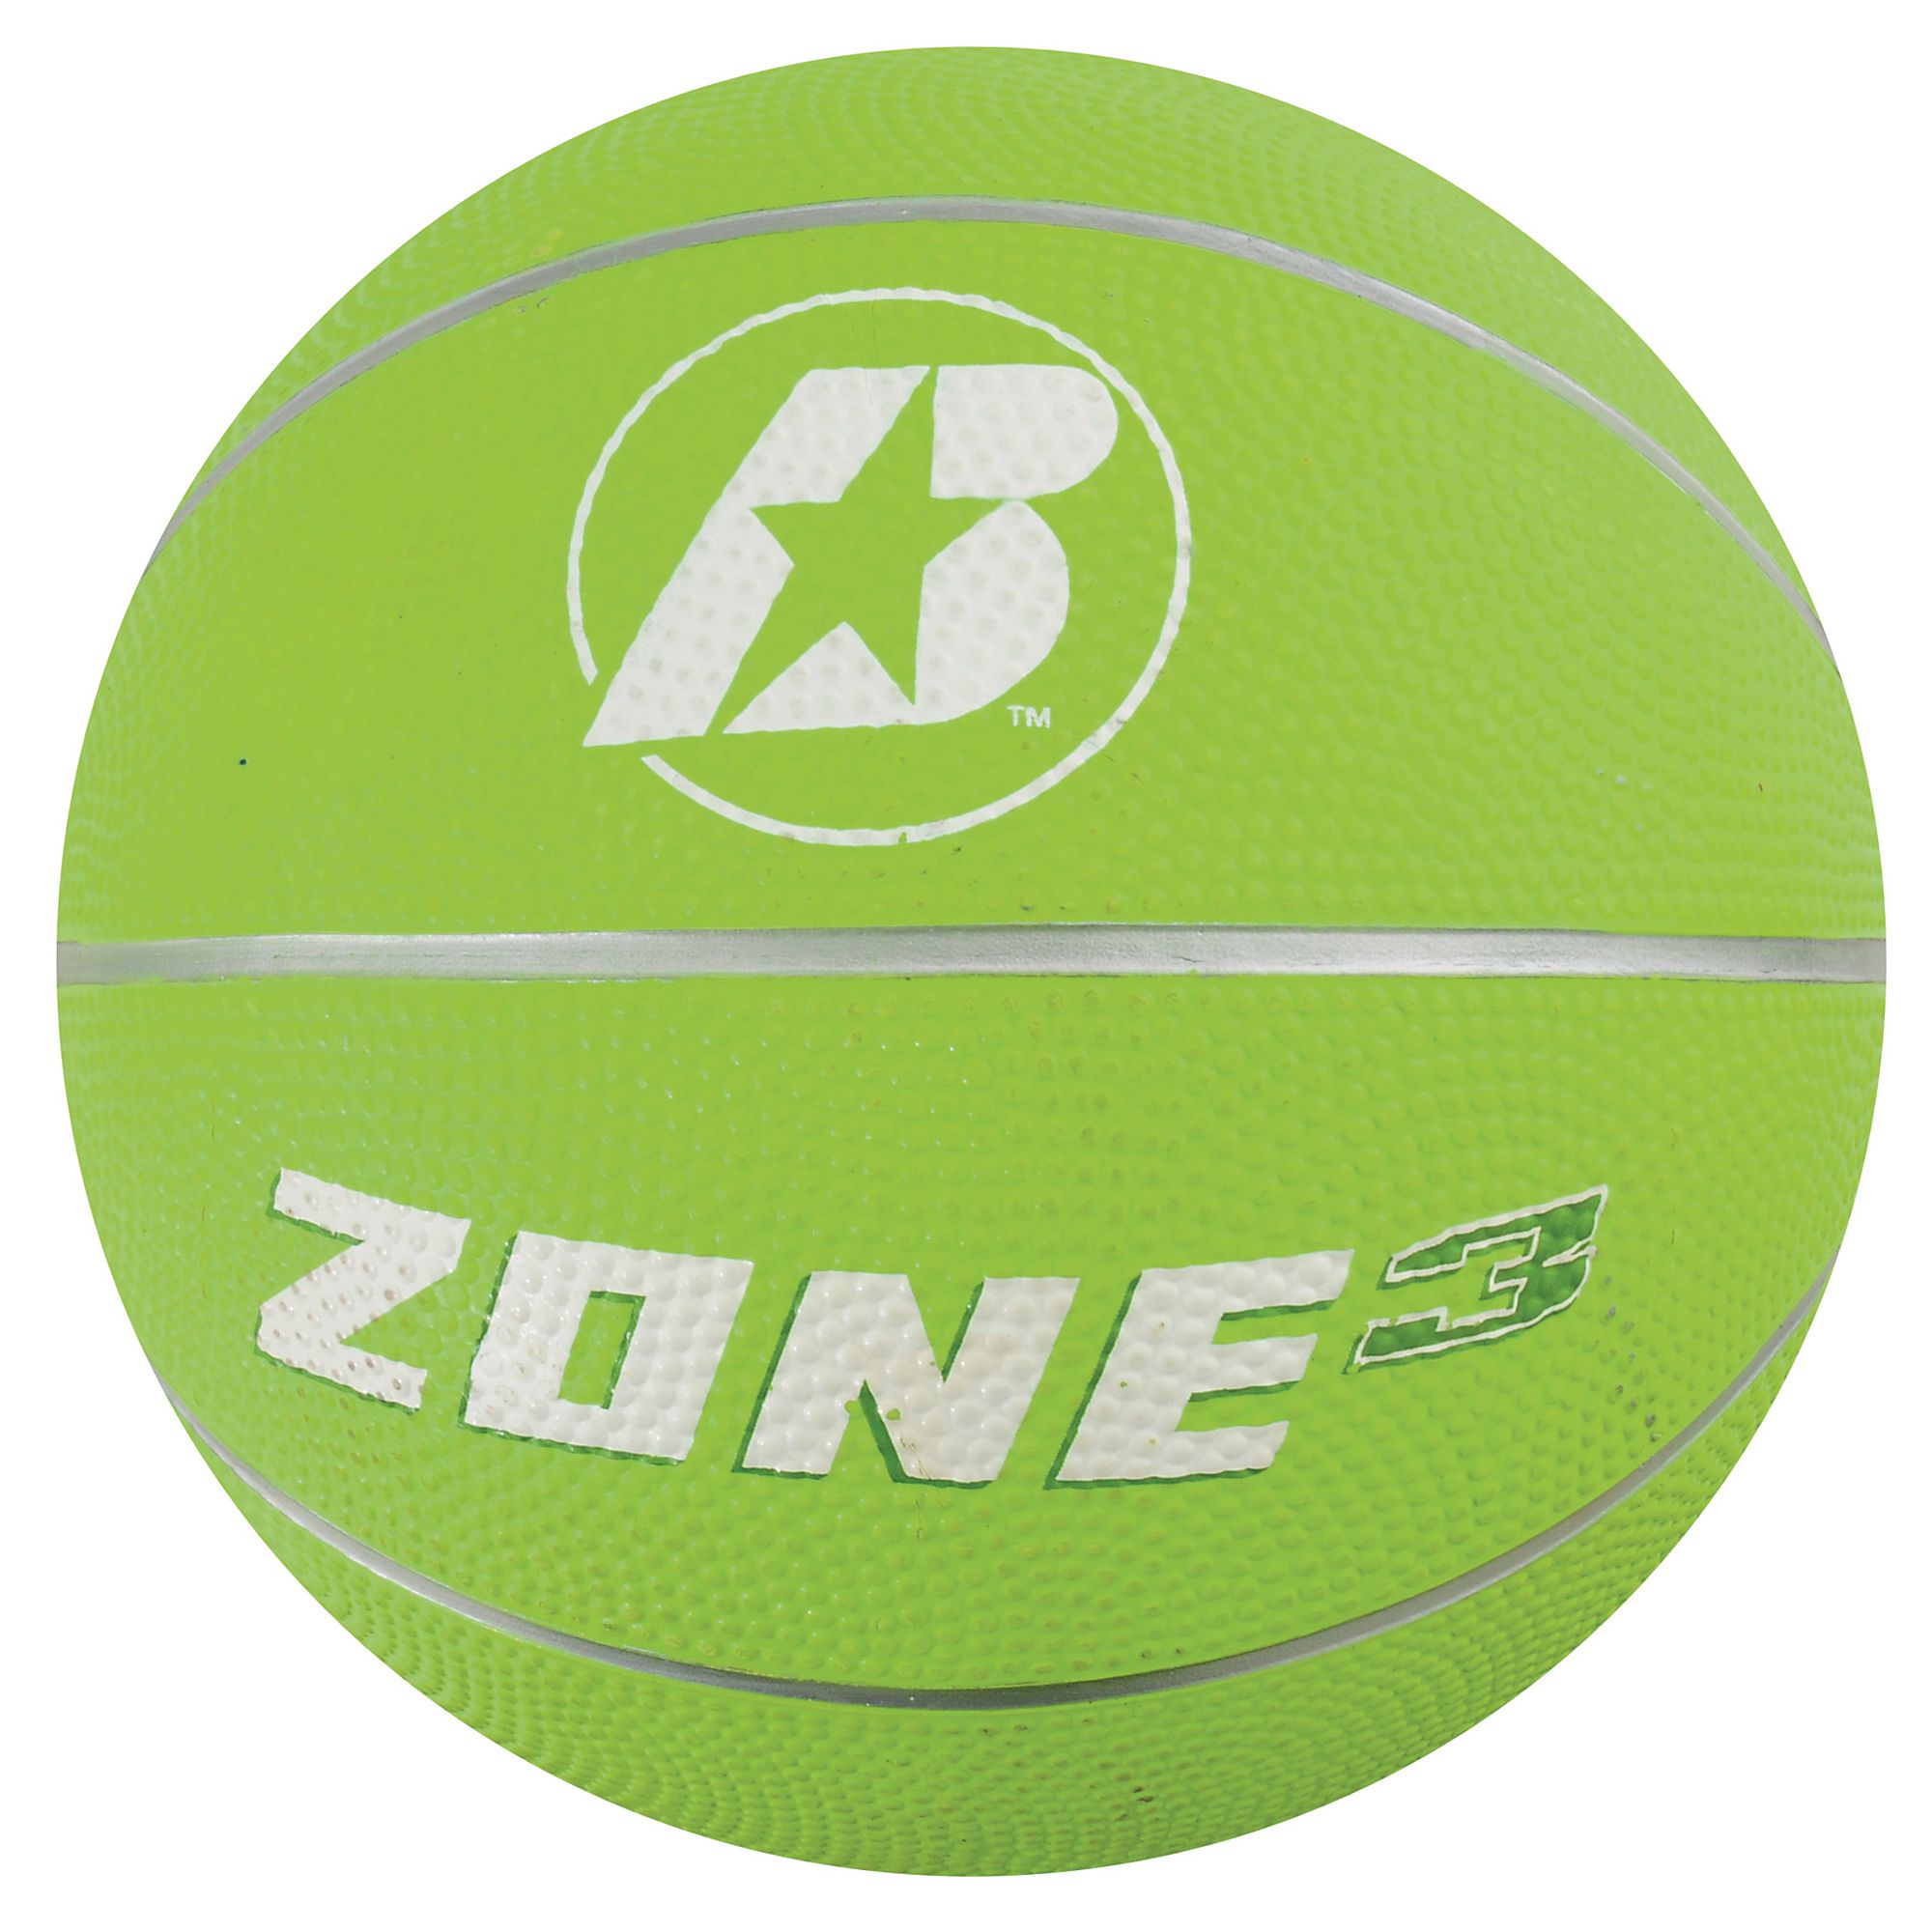 B?íden Zone Basketball - Green - Size 3